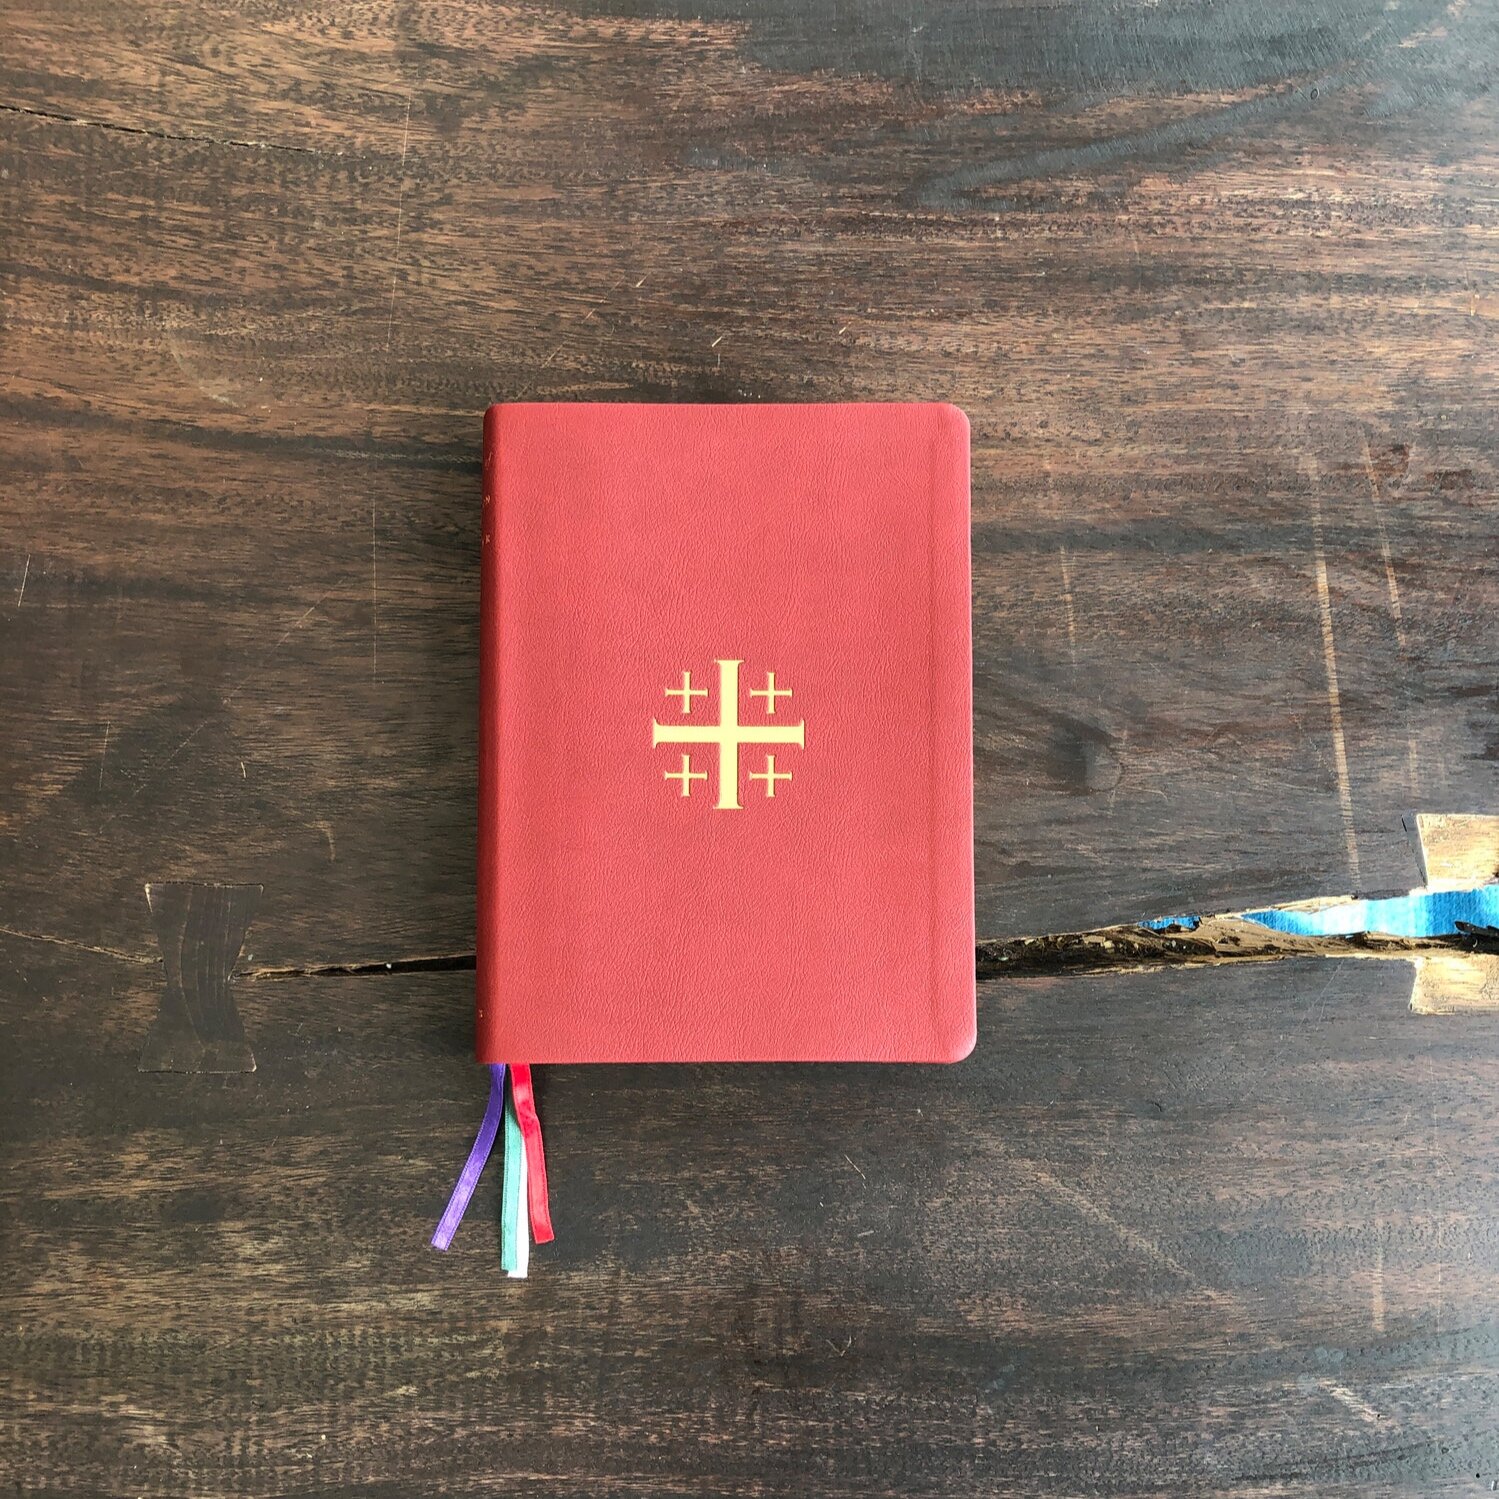 ACNA Book of Common Prayer 2019: A Guide to the ACNA Prayer Book!